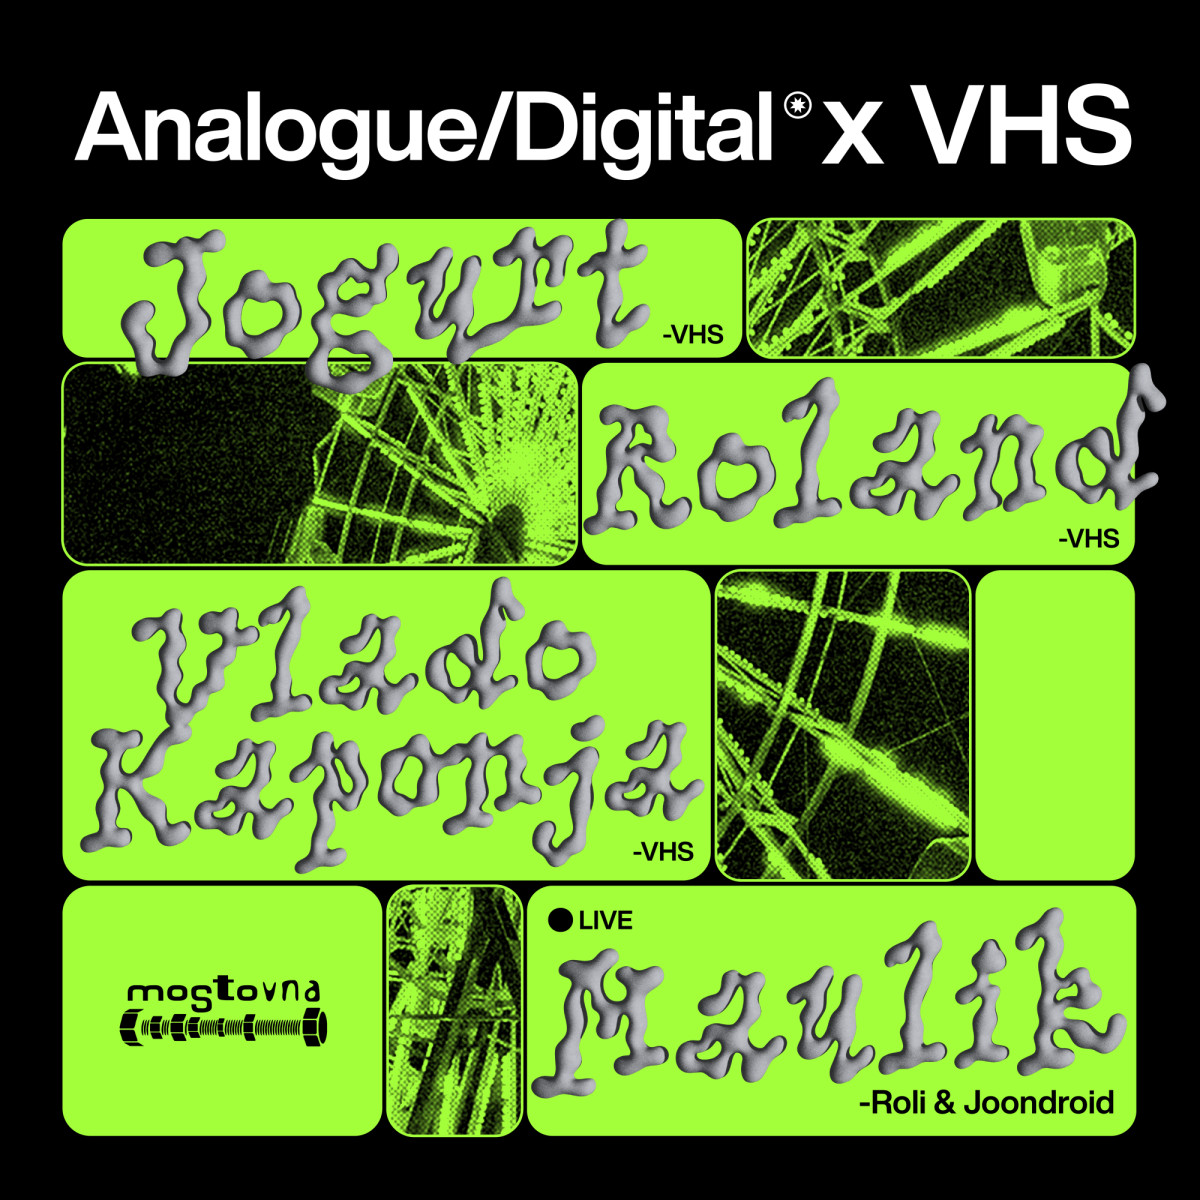 Analogue/Digital x VHS (Videohousesystem)